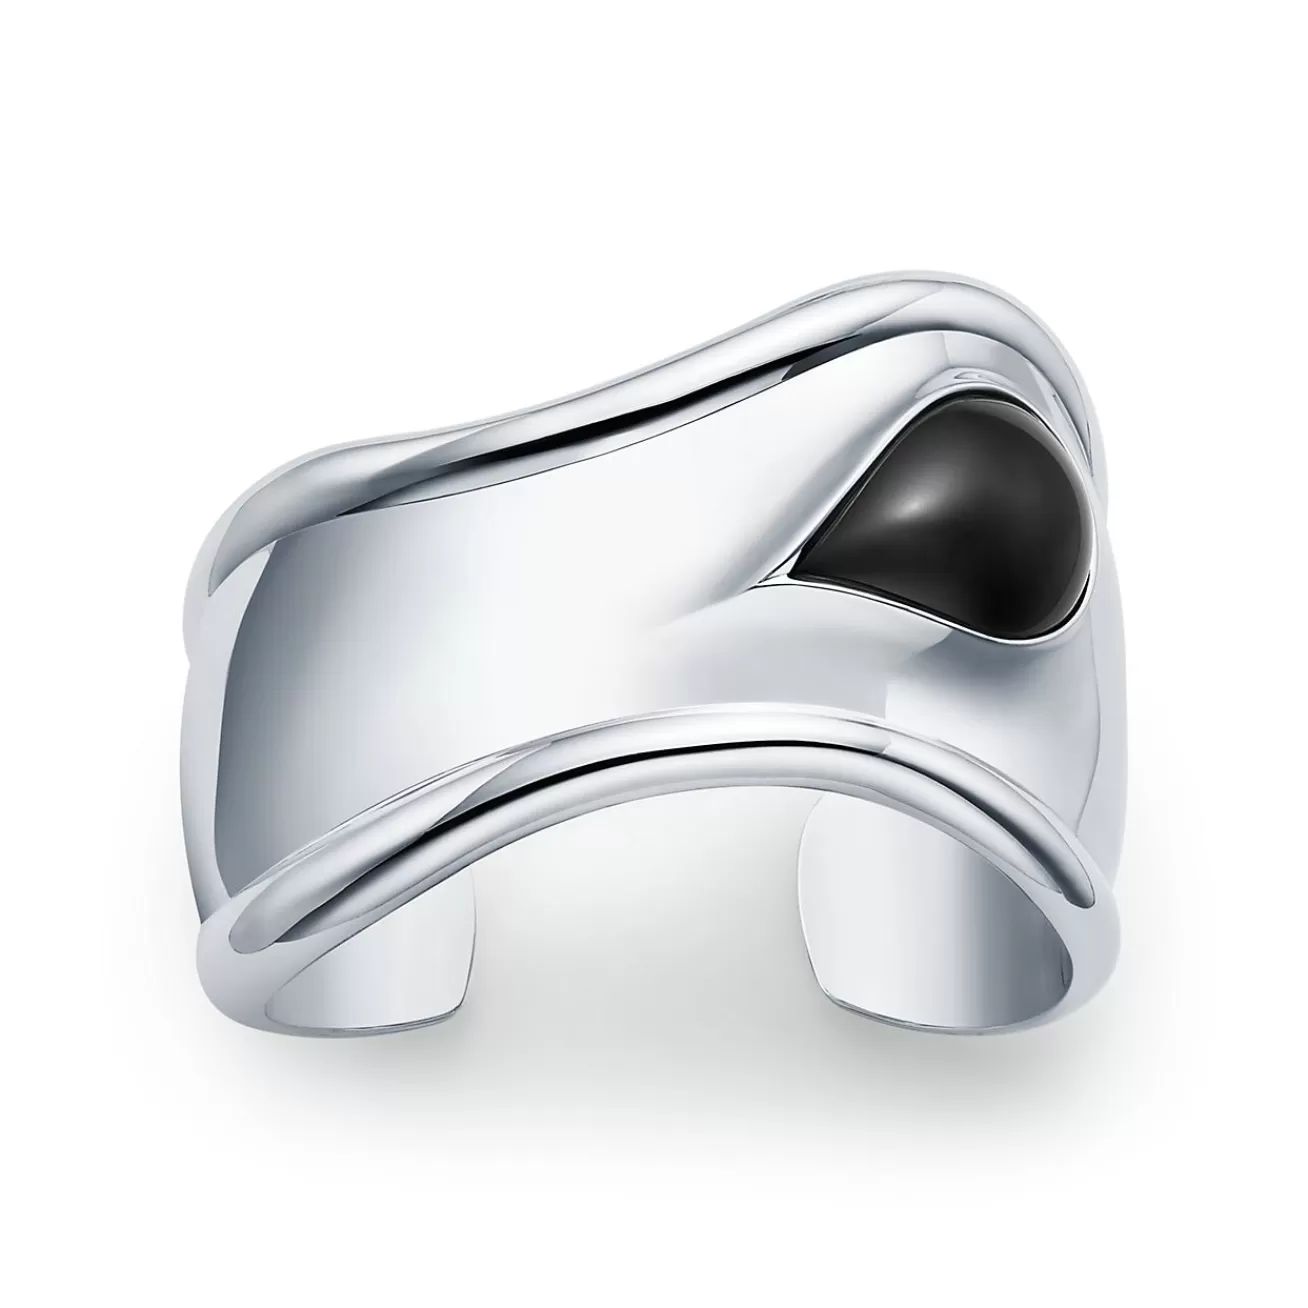 Tiffany & Co. Elsa Peretti® small Bone cuff in sterling silver with black jade, 43 mm wide. | ^ Bracelets | Colored Gemstone Jewelry